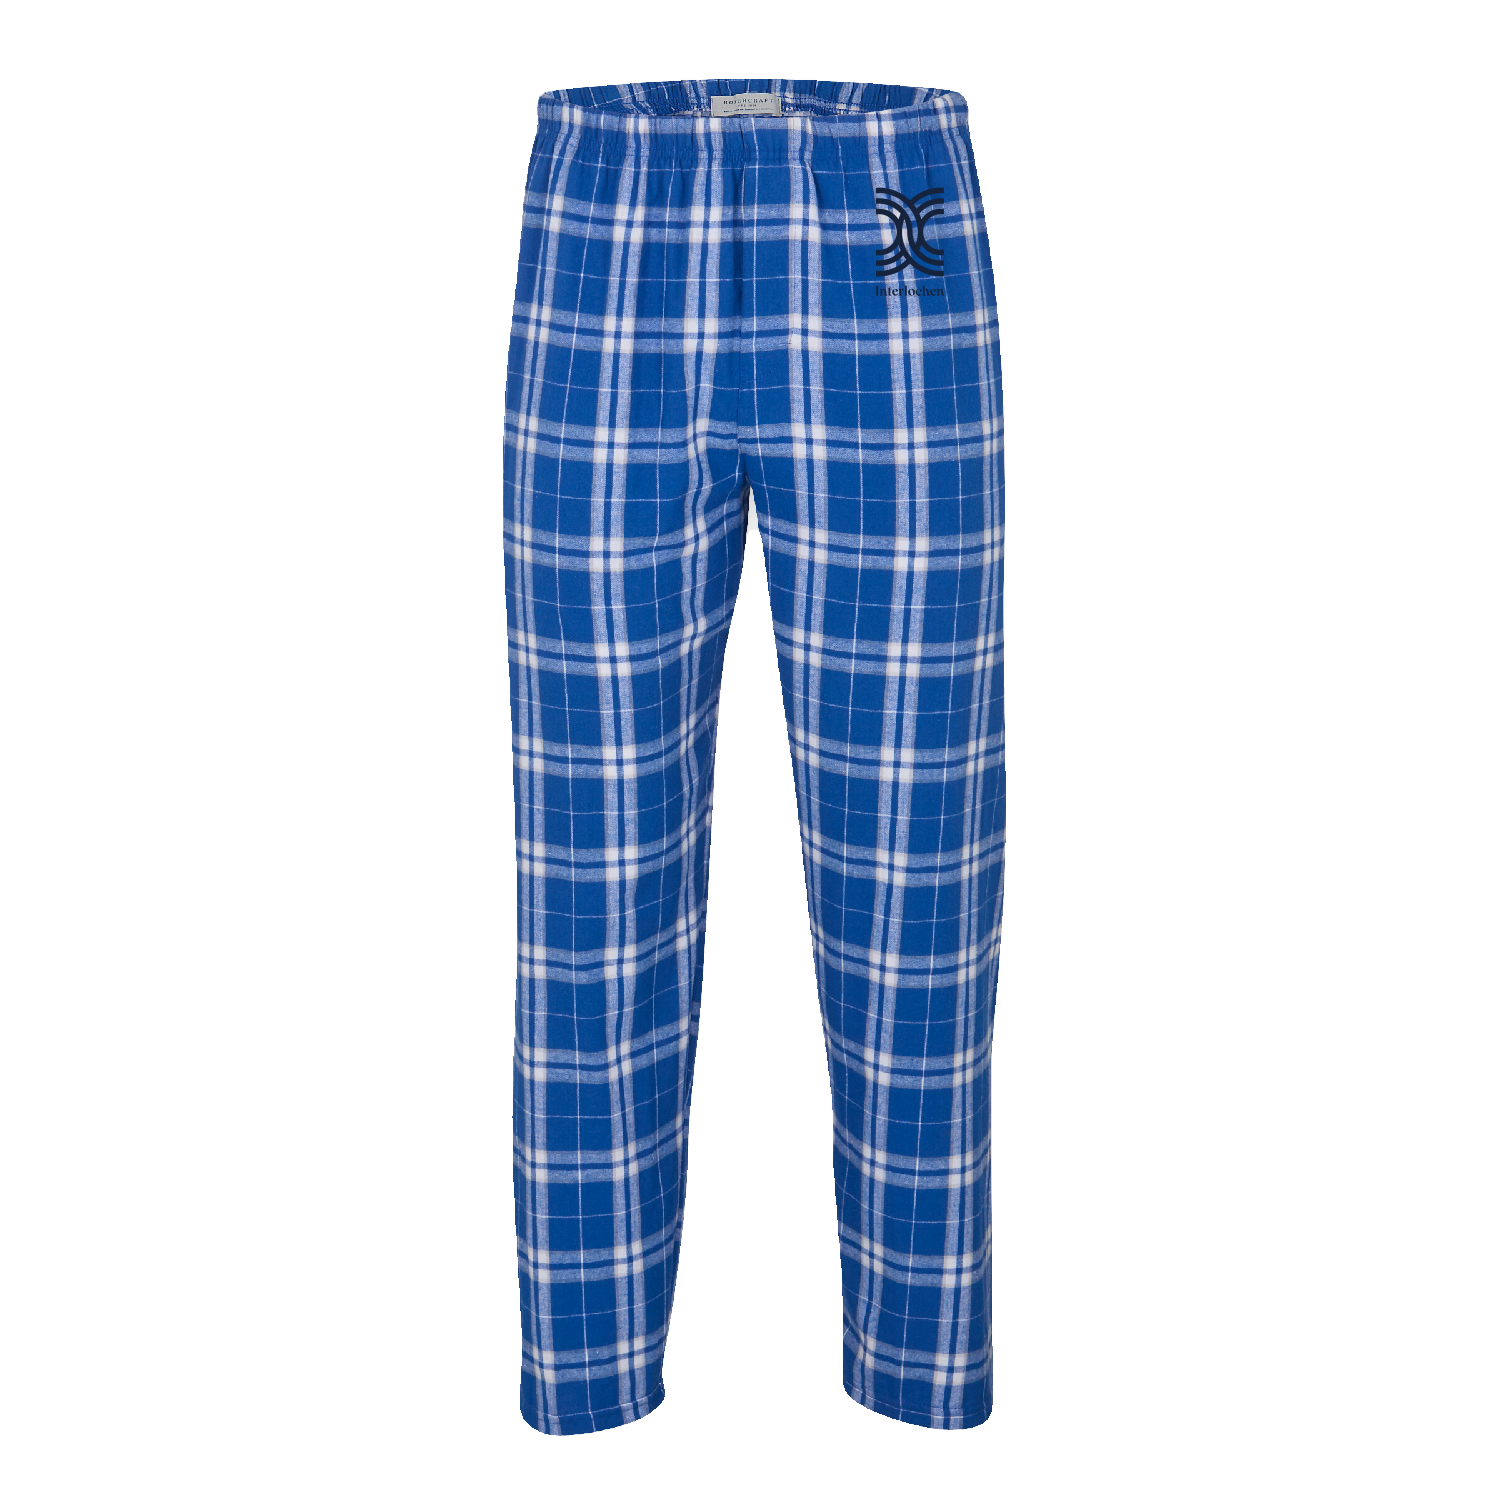 Boys X-LARGE 16 - Light Blue Plaid Pajama Pants Bottoms - Cat Jack - NWT